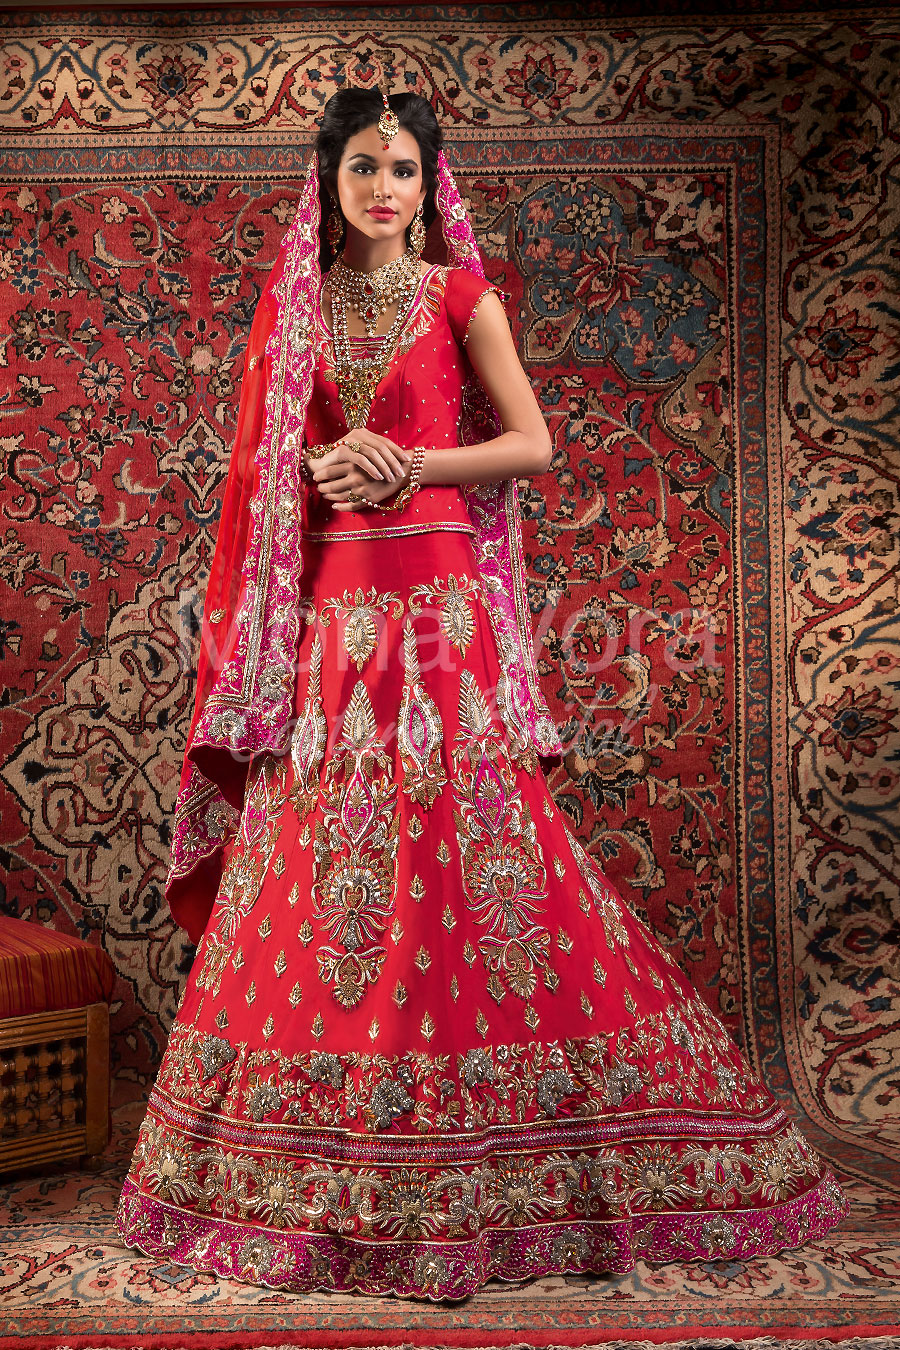 https://www.styleswardrobe.com/wp-content/uploads/2015/10/indian-bridal-dresses-7.jpg